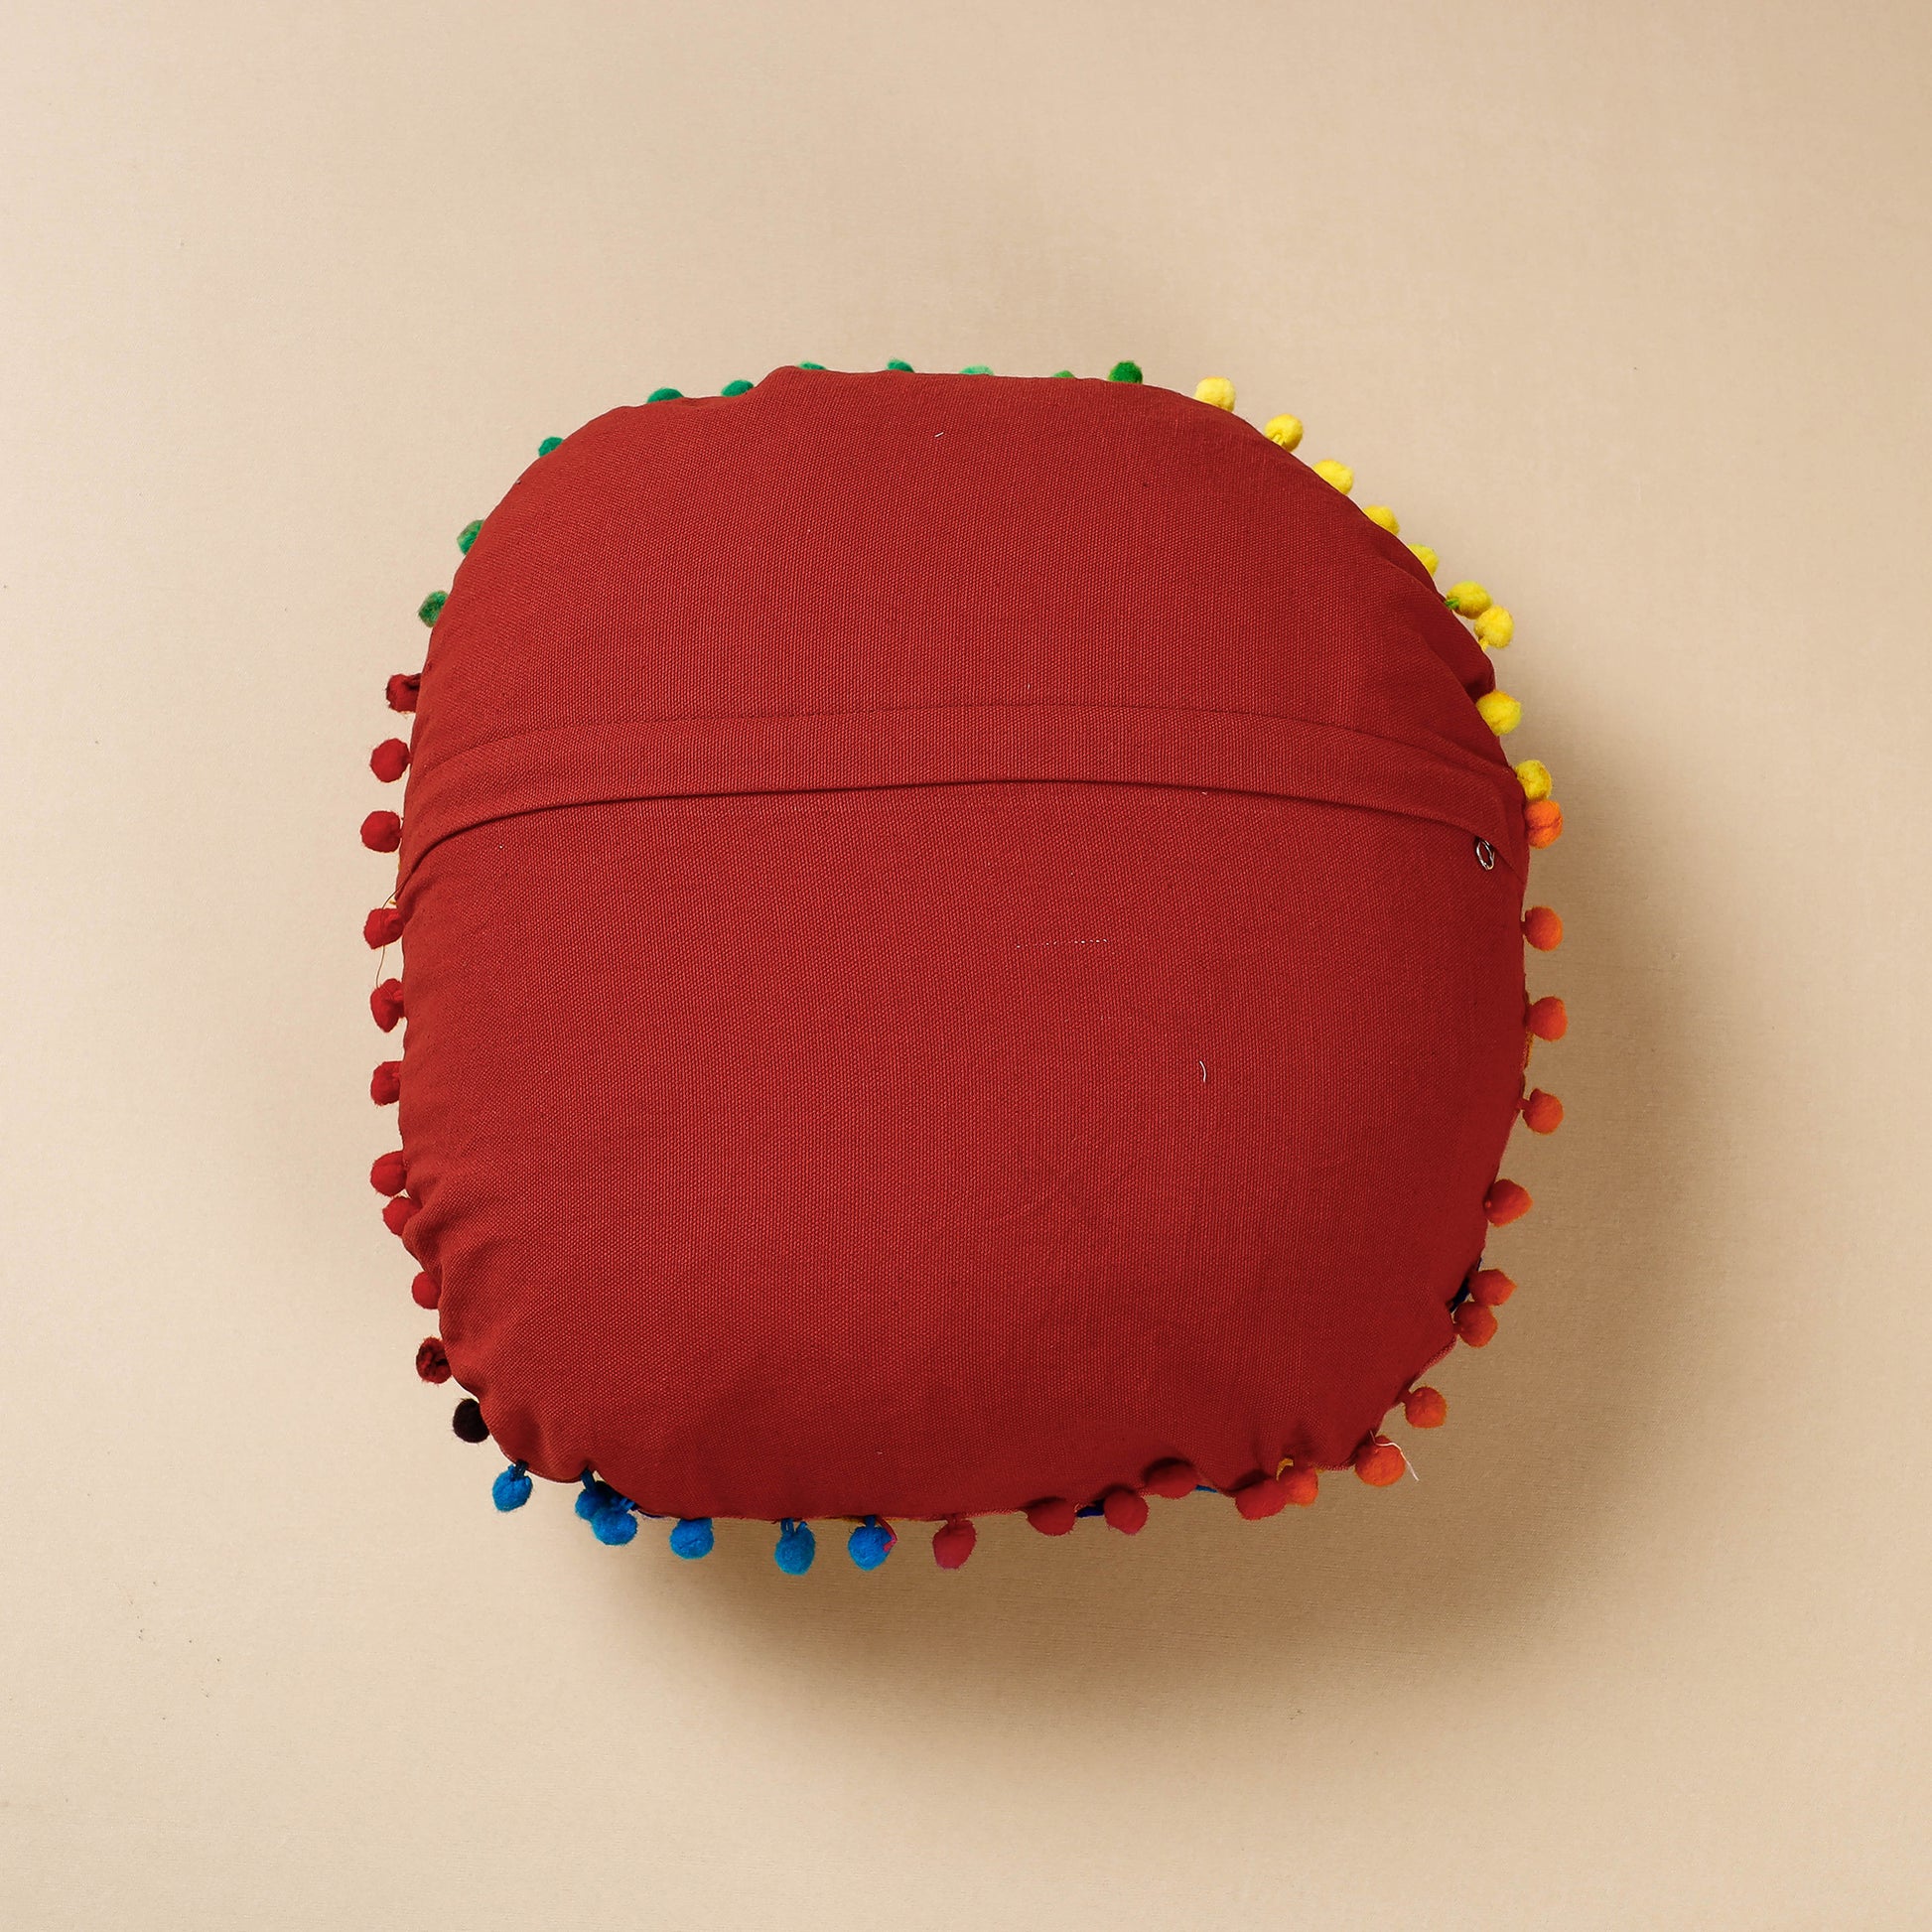  Suzani Embroidery Cushion Cover 